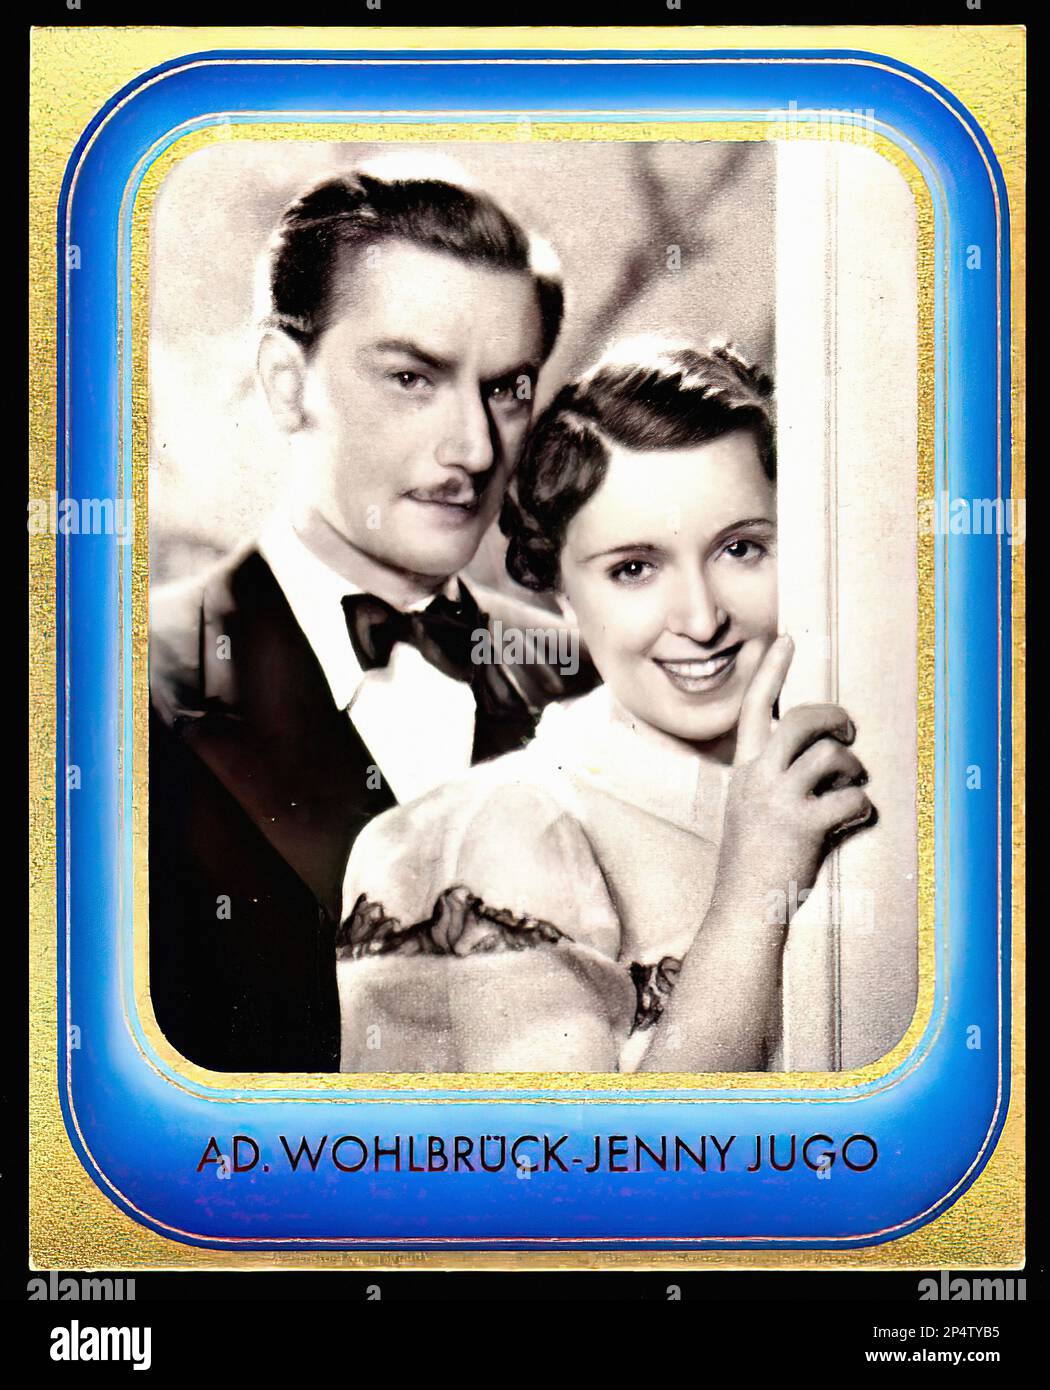 Portrait of Adolf Wohlbruck and Jenny Jugo - Vintage German Cigarette Card Stock Photo